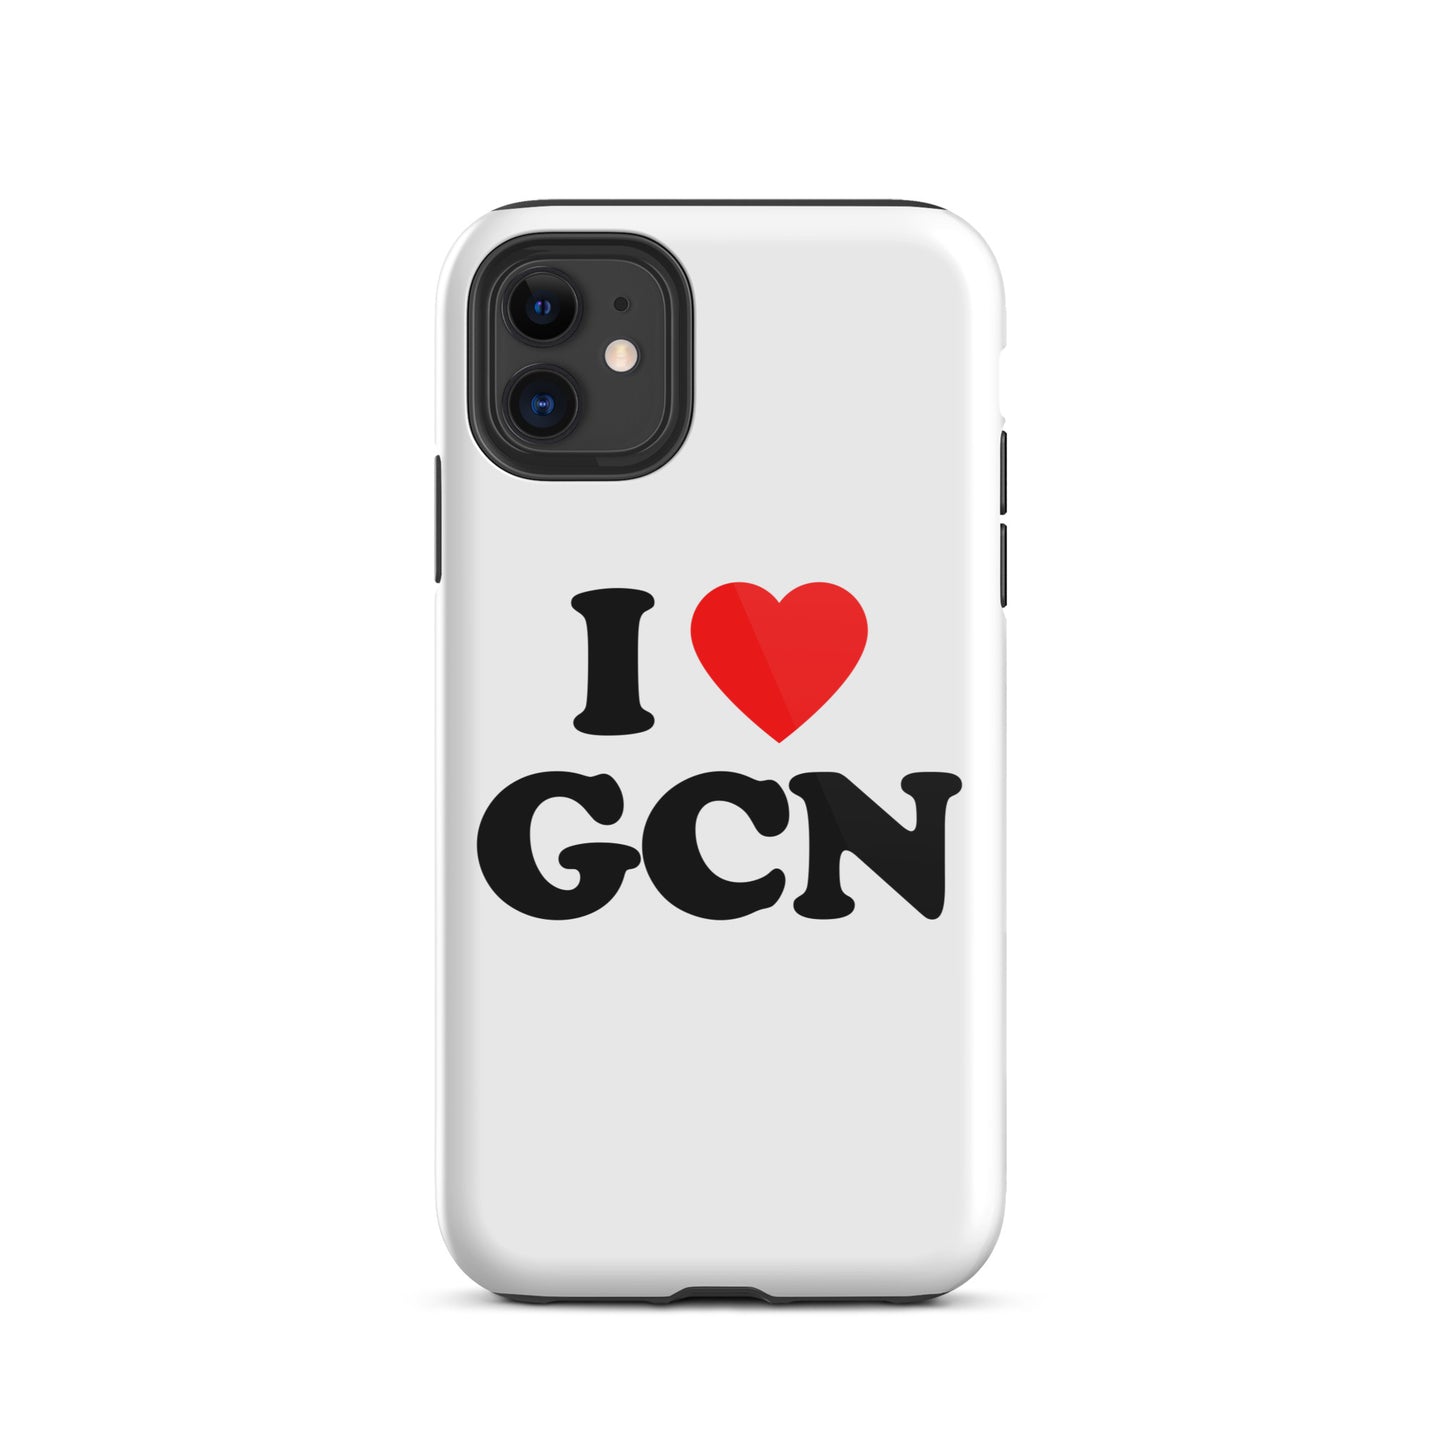 featured 😻 GOOD CAT - "I ❤️ GCN" Tough iPhone case